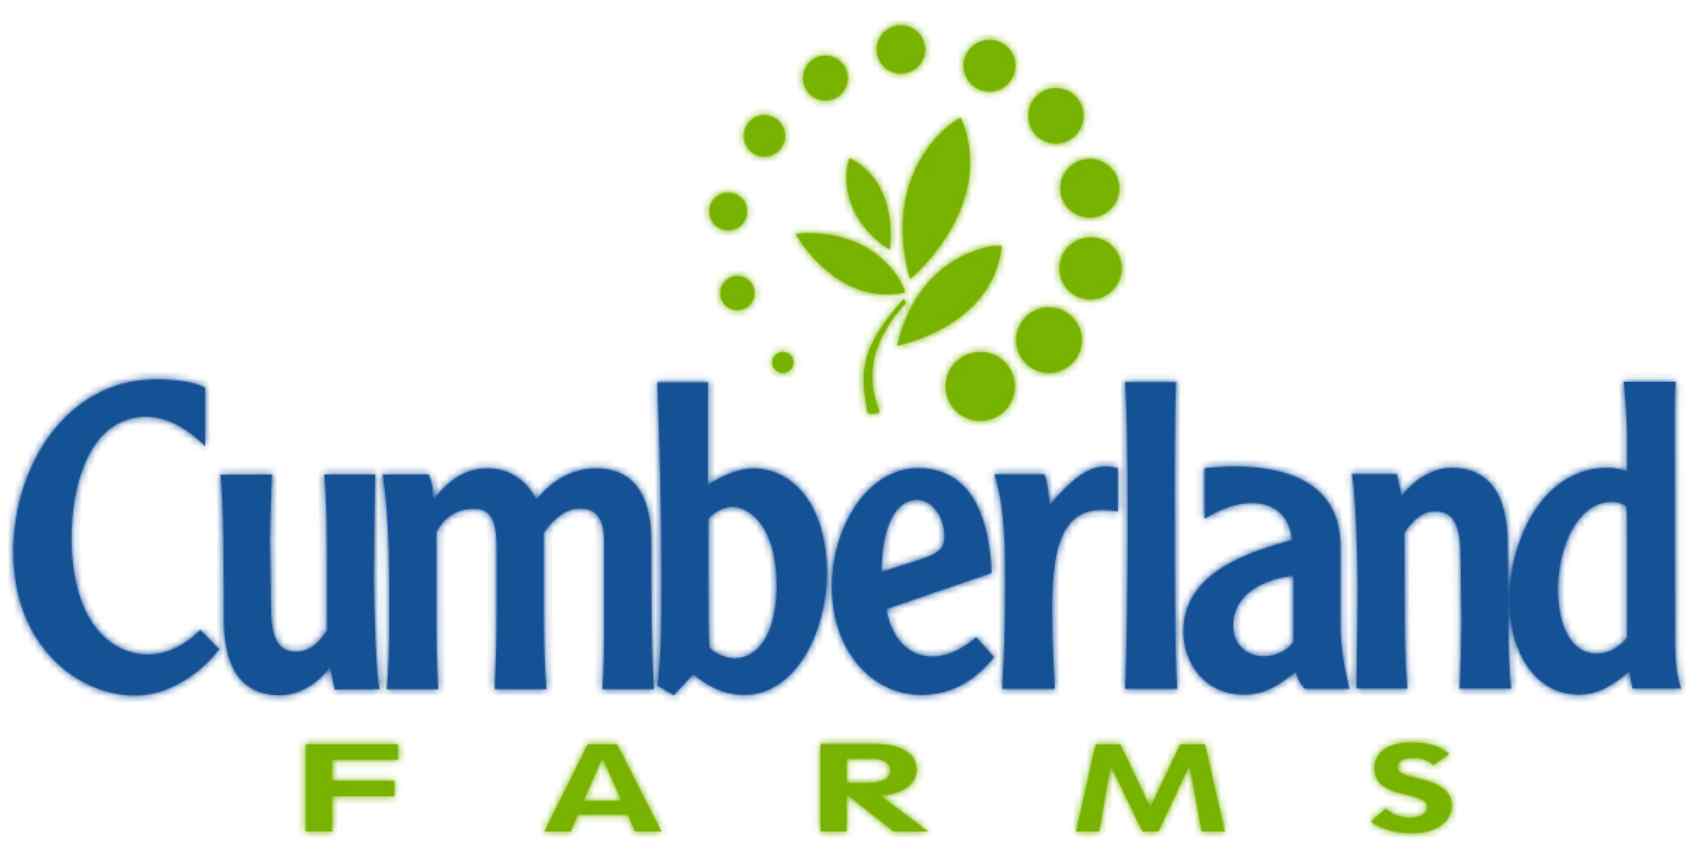 Cumberland Farms Logo